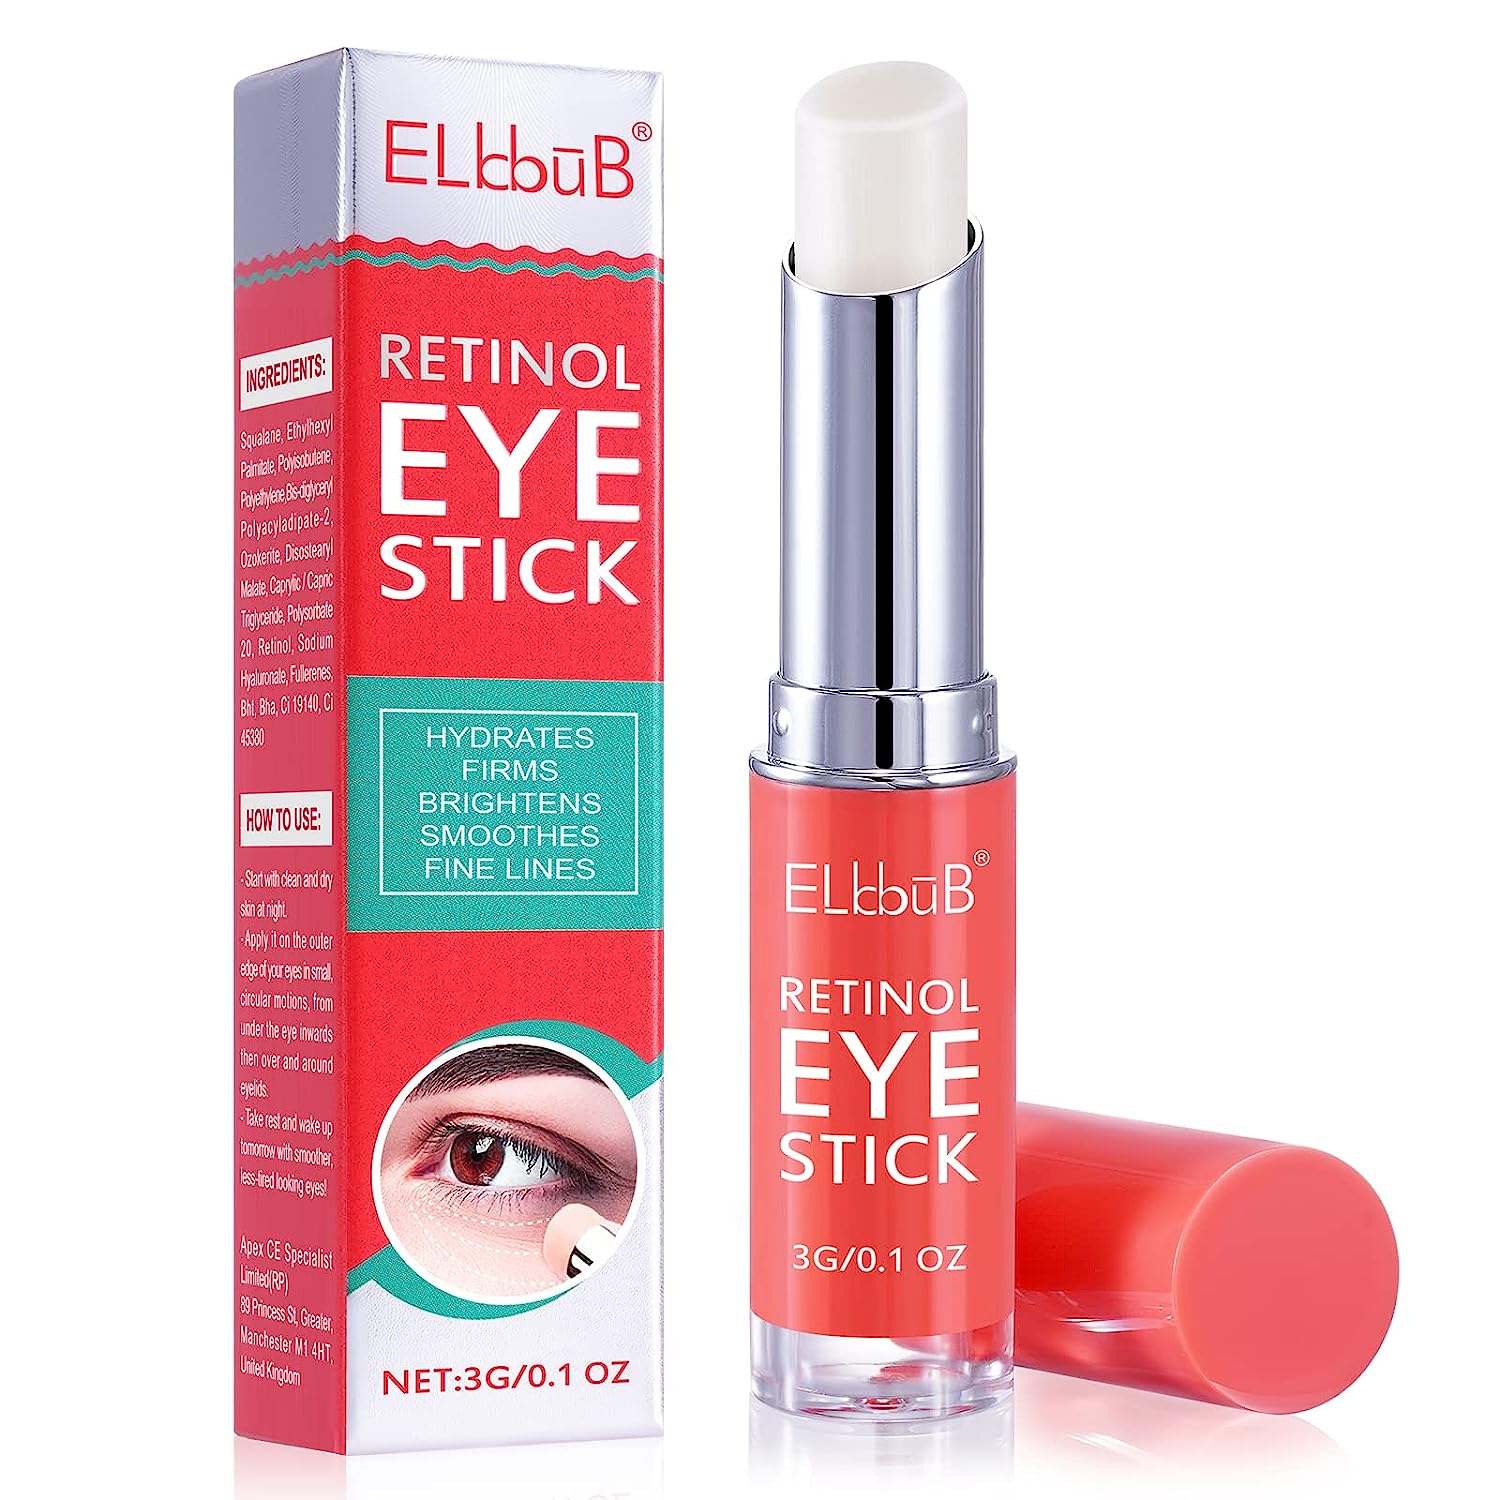 Retinol Eye Stick Anti Wrinkle Eye Cream for Puffy Eyes, Dark Circles, Eye Bags, Crows Feet, Wrinkles, Reduces Wrinkles Saggy Skin Puffy Eyes